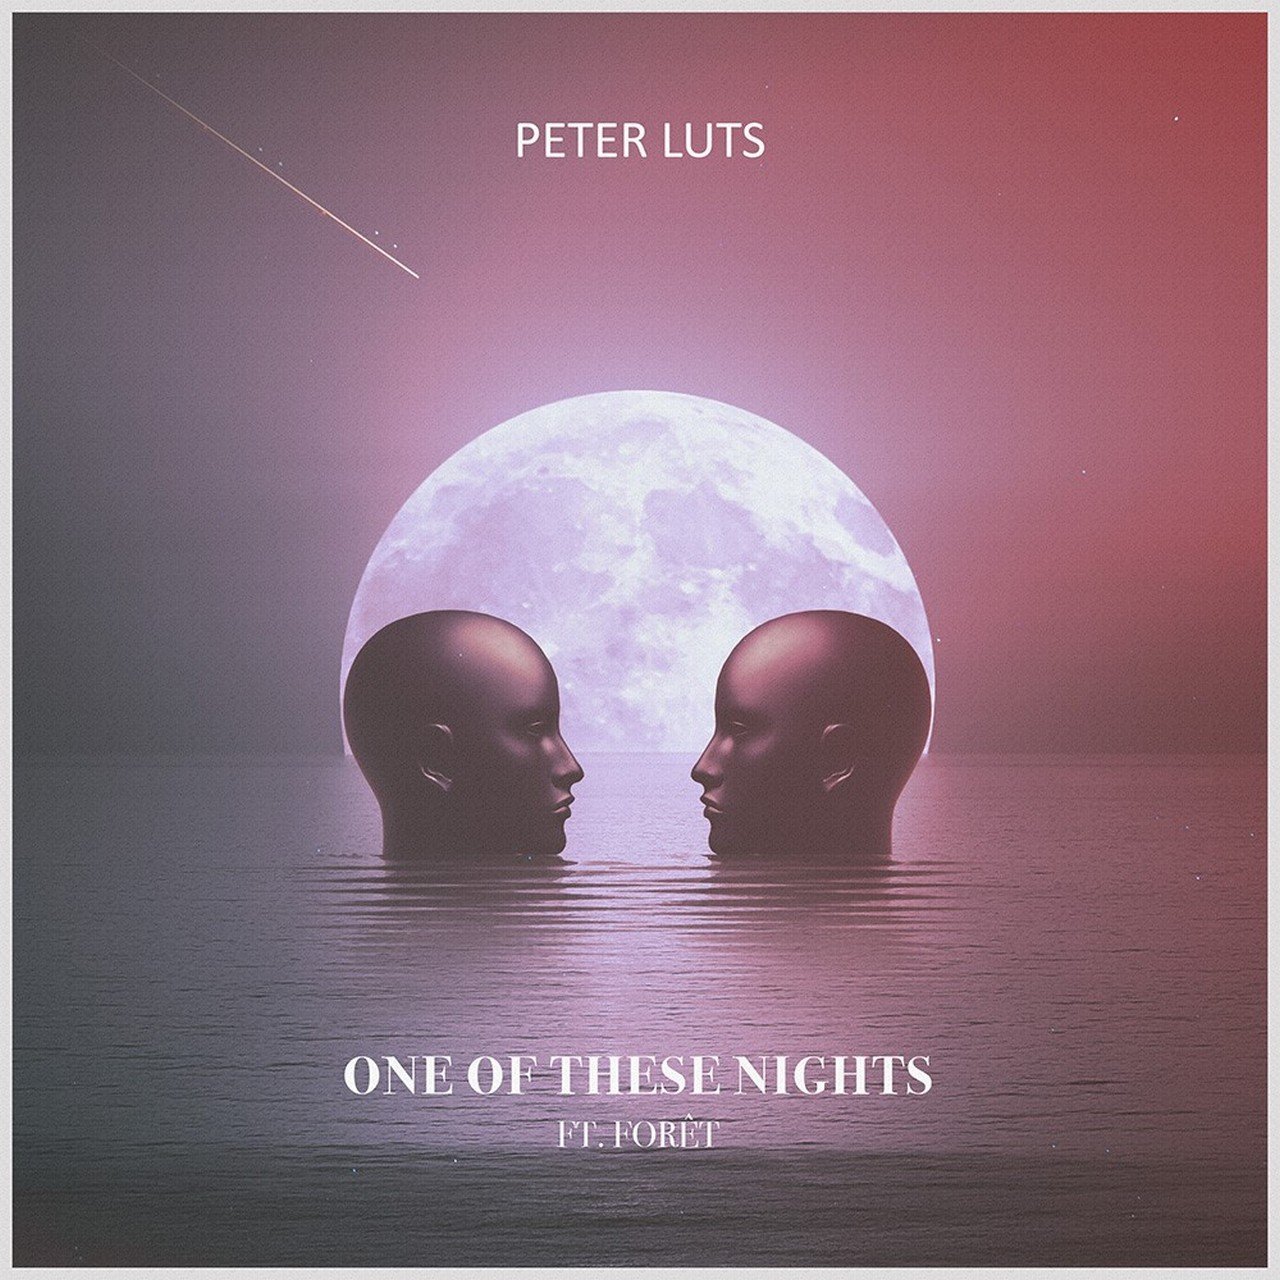 Peter Luts en Nederlandse Celine Forêt scoren internationale aandacht - Hoes one of these Nights